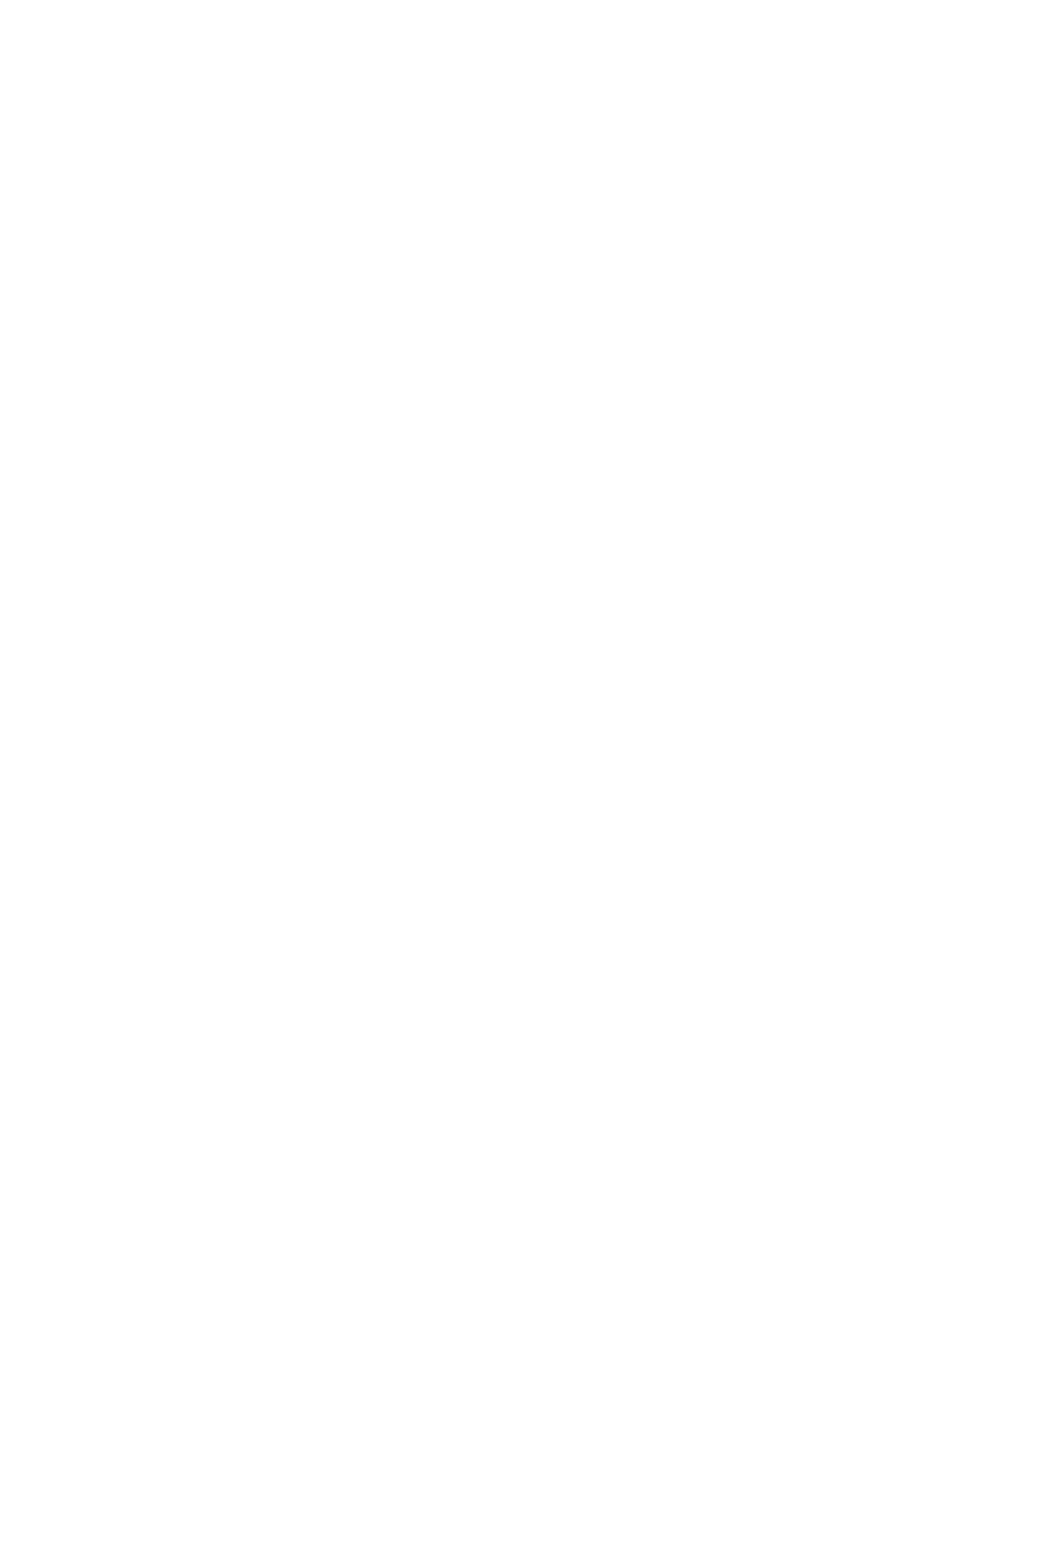 Peoples Bancorp of North Carolina logo for dark backgrounds (transparent PNG)